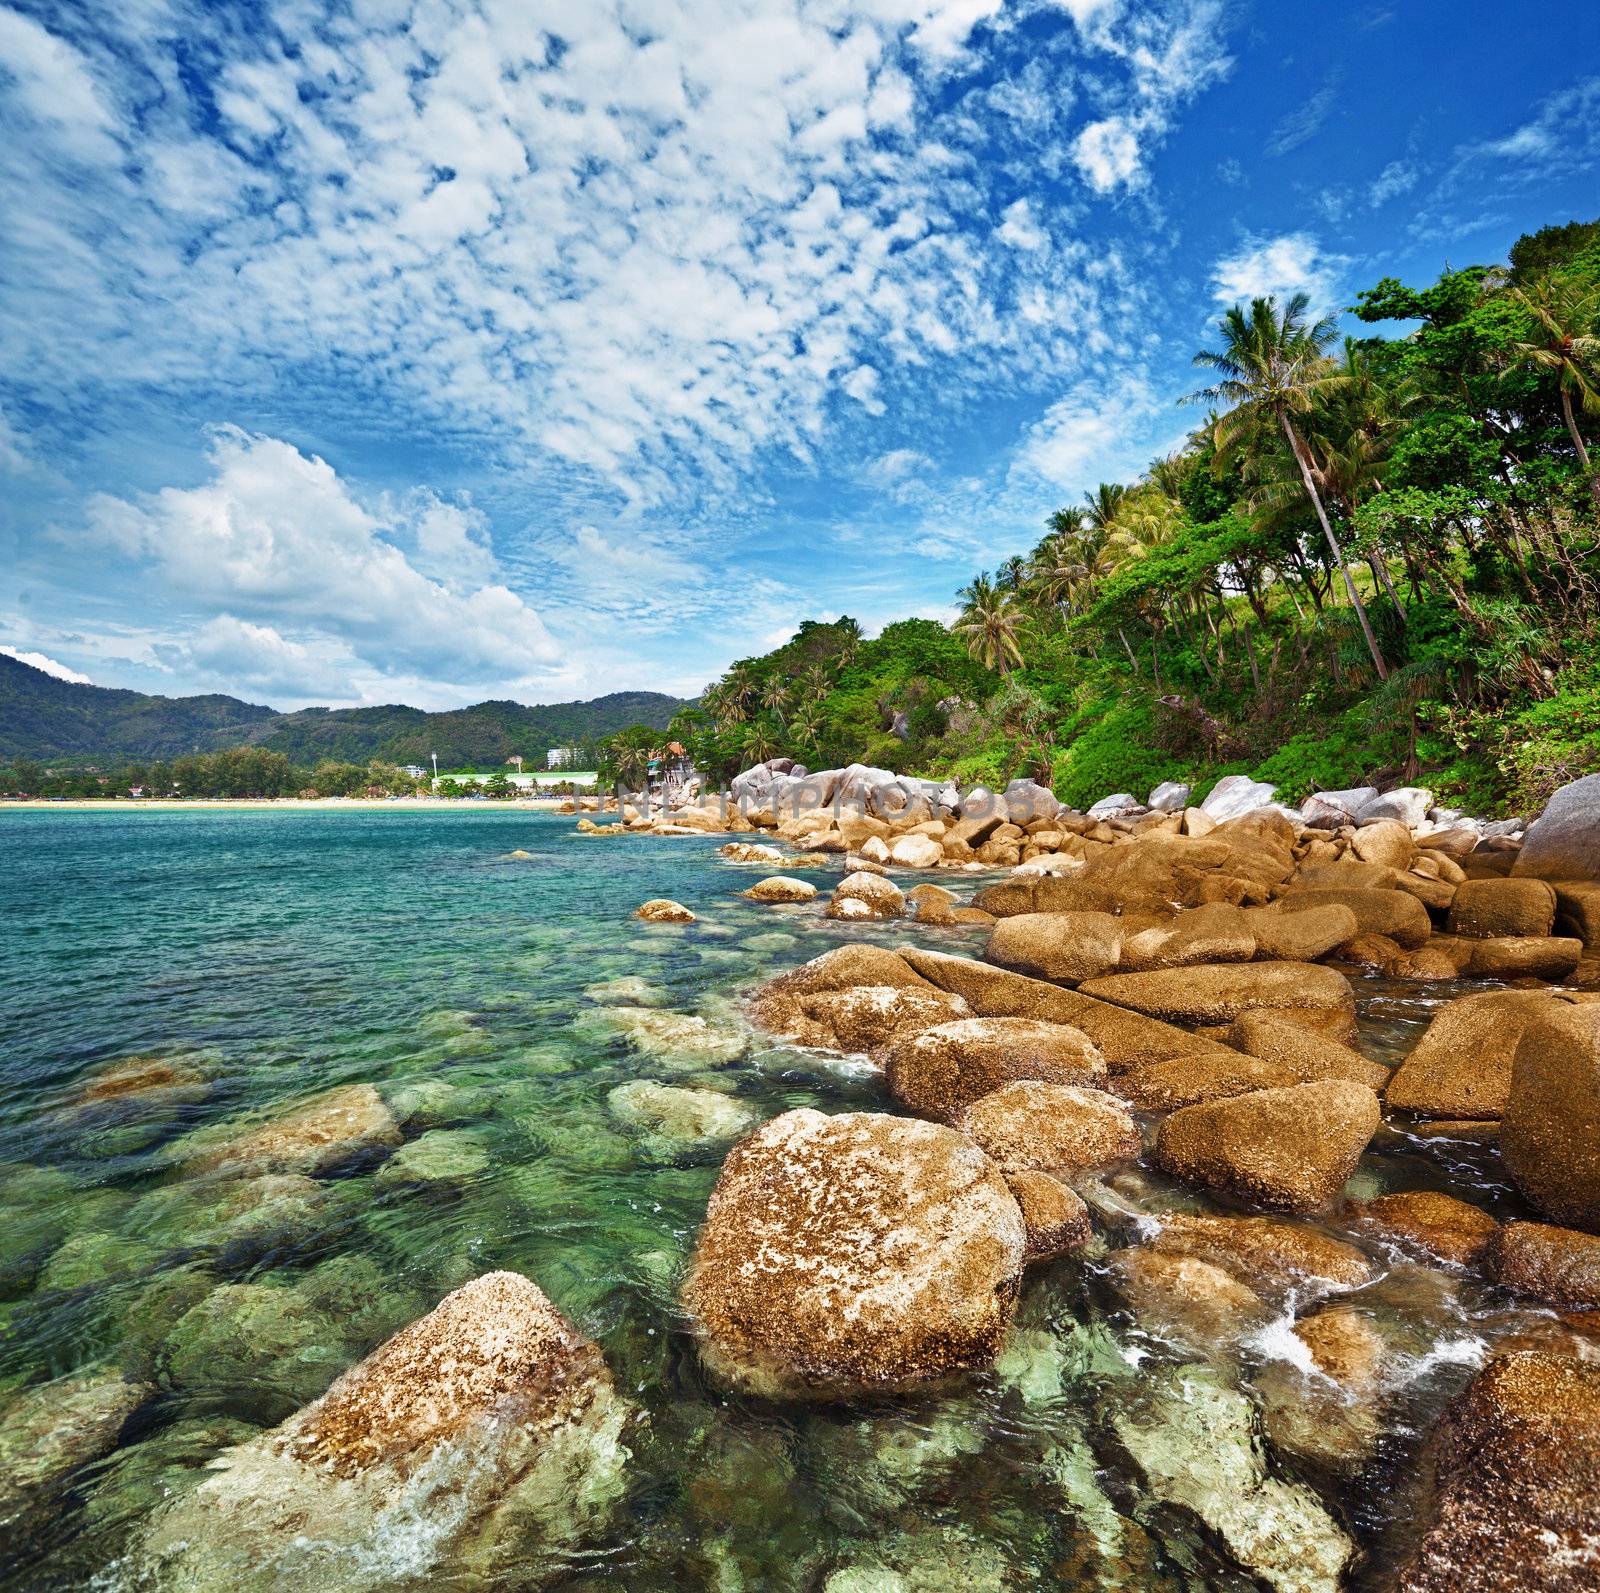 Coast of the tropical ocean - Thailand by pzaxe